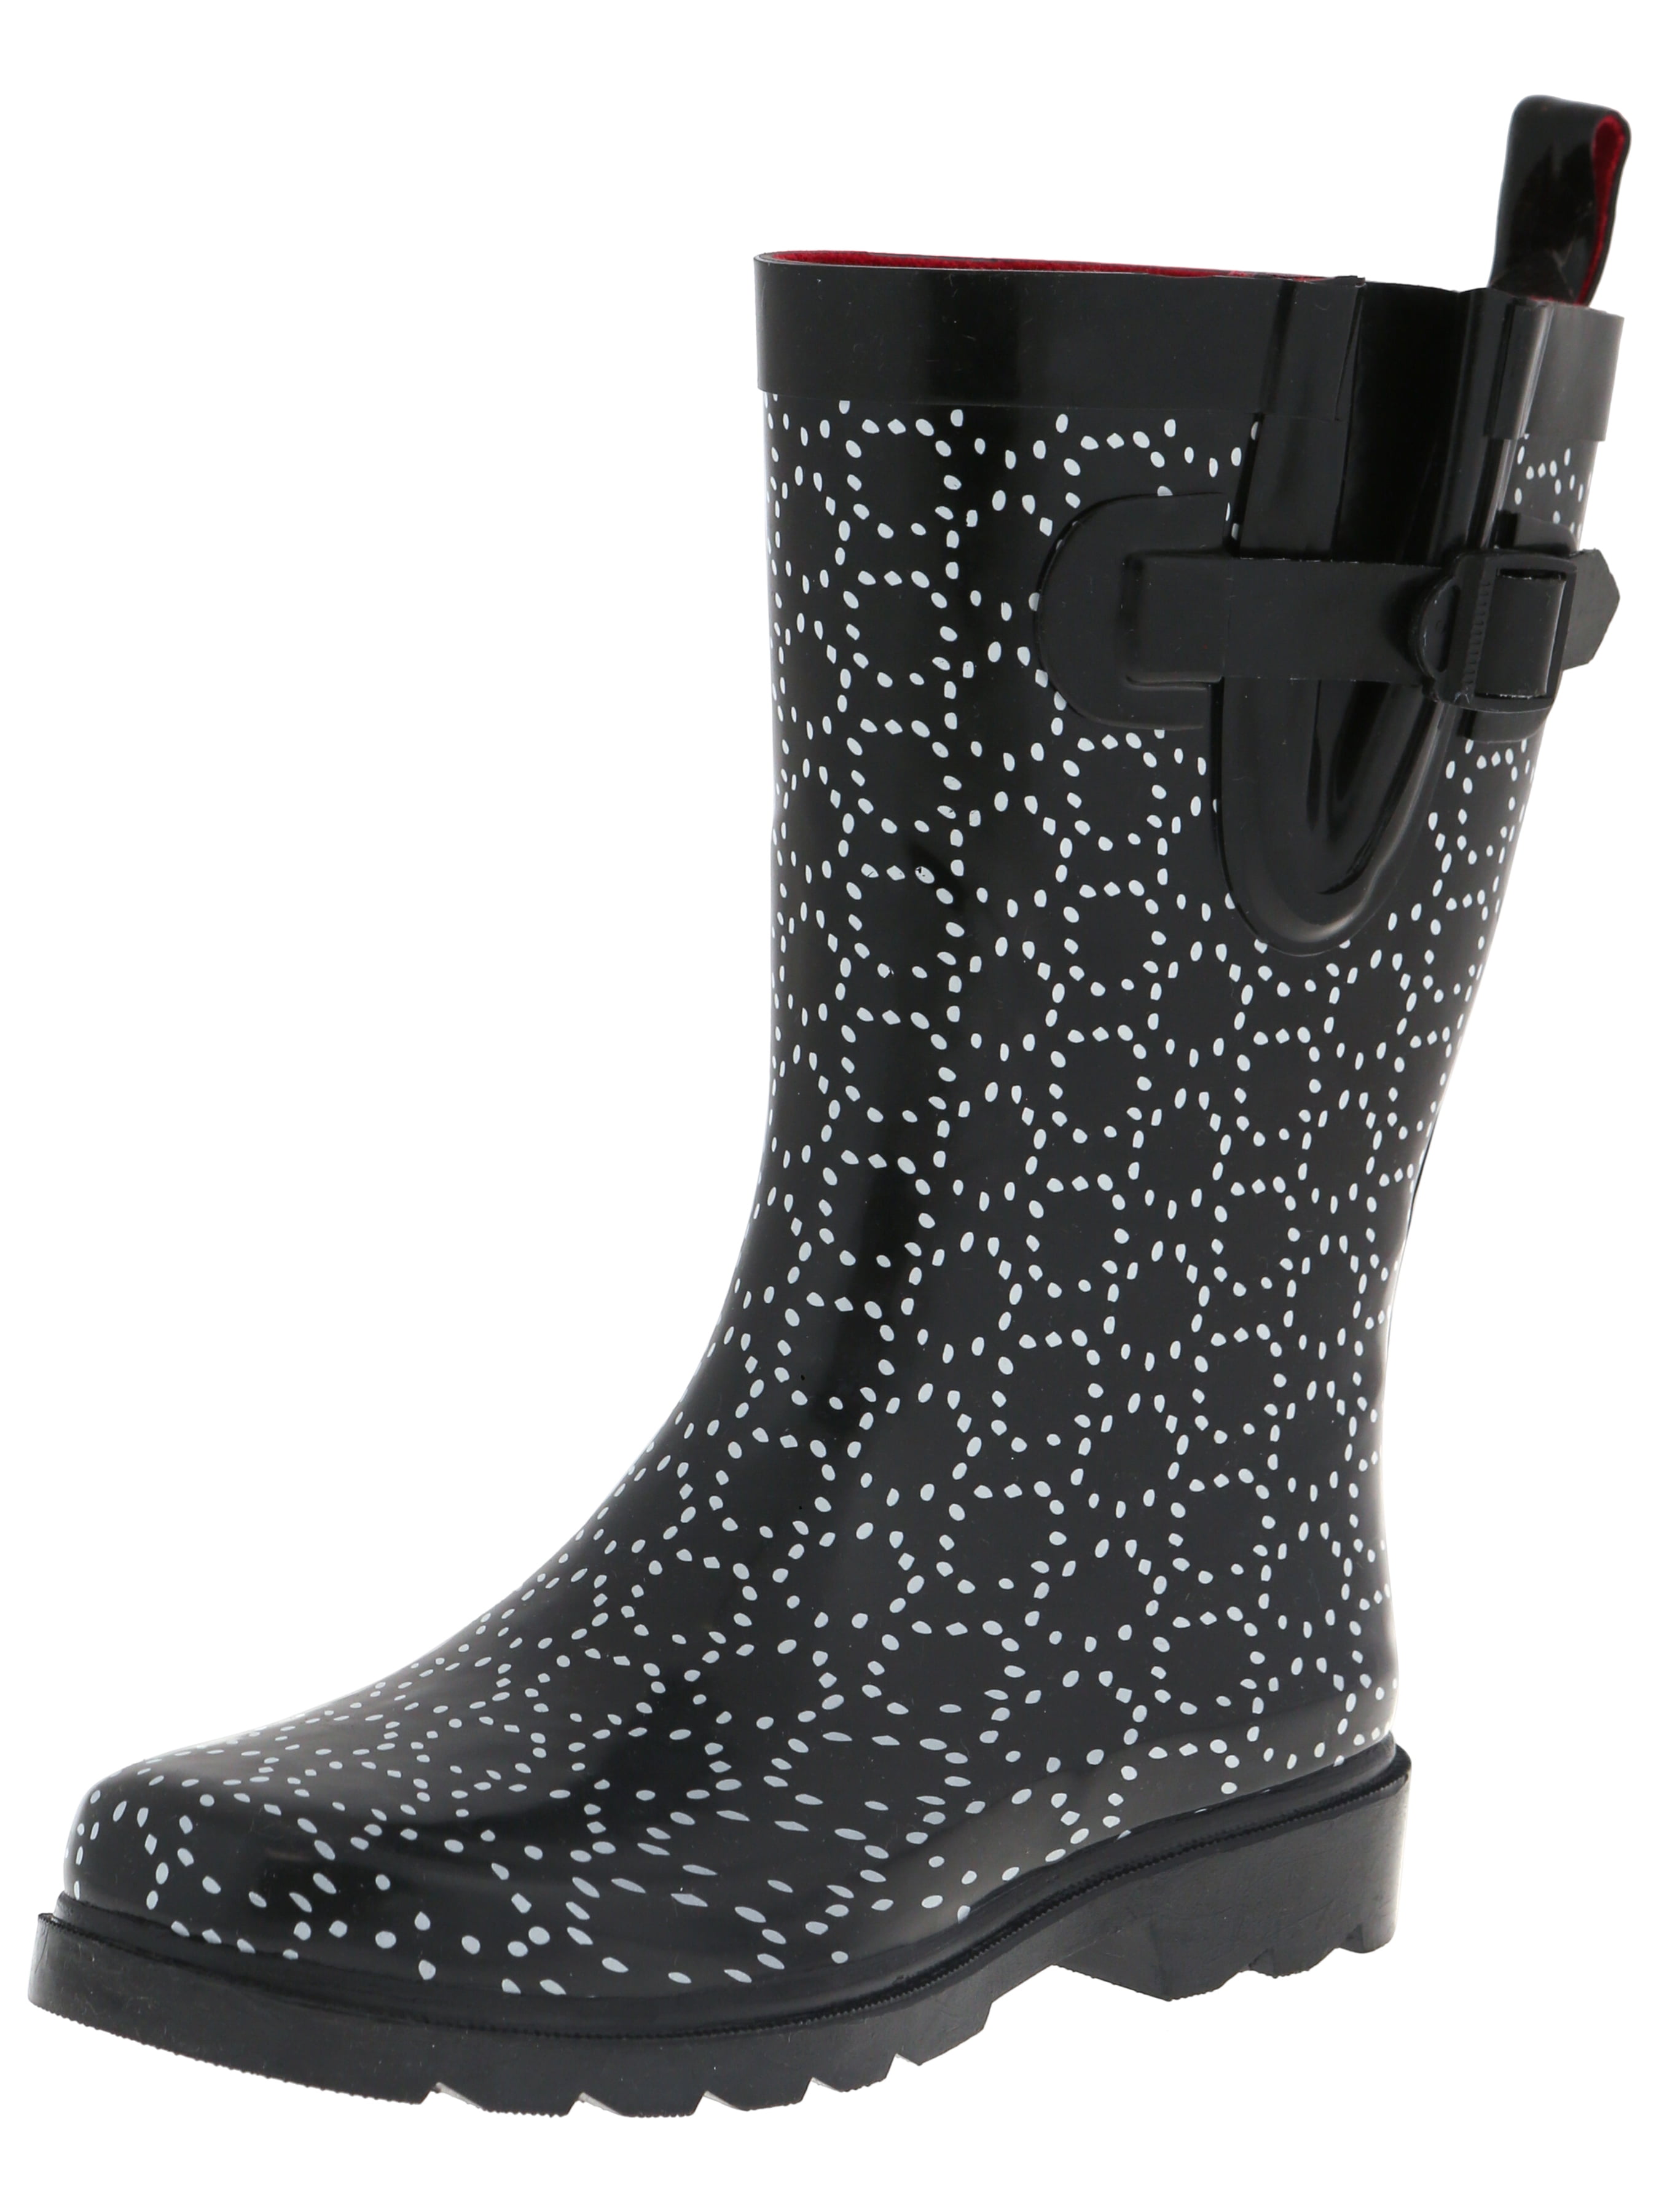 women's rubber rain boots walmart